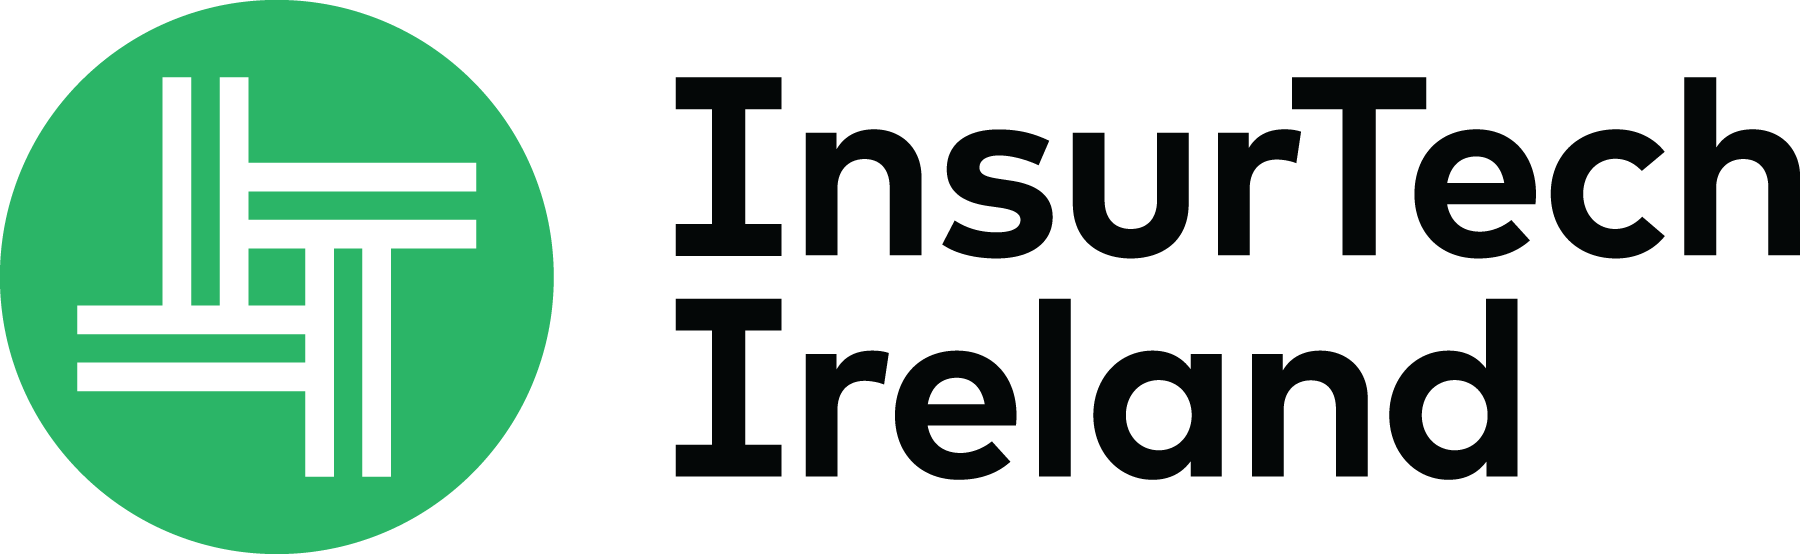 InsurTech Ireland